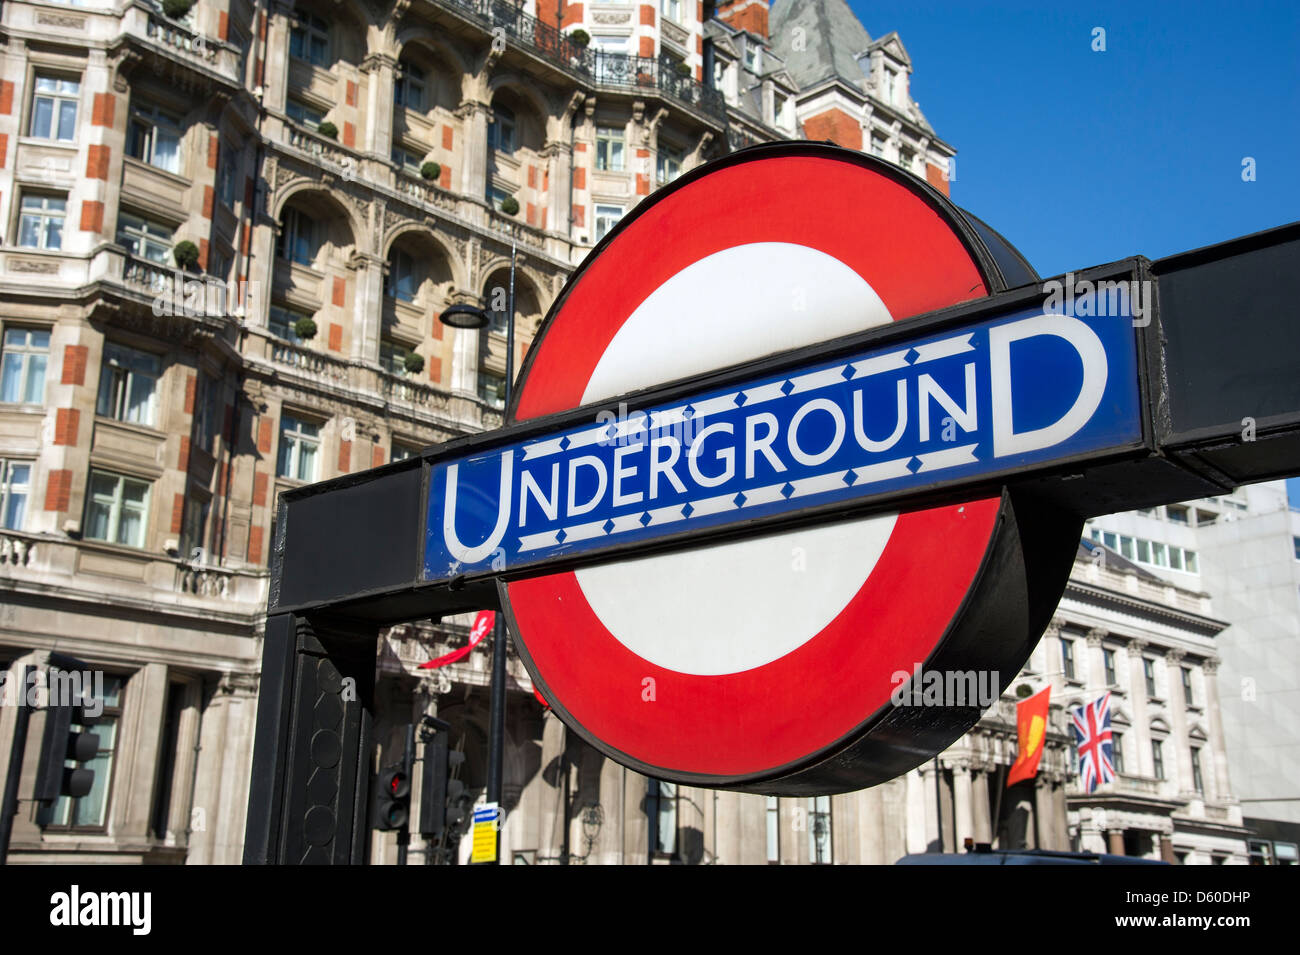 London Underground sign, UK Banque D'Images